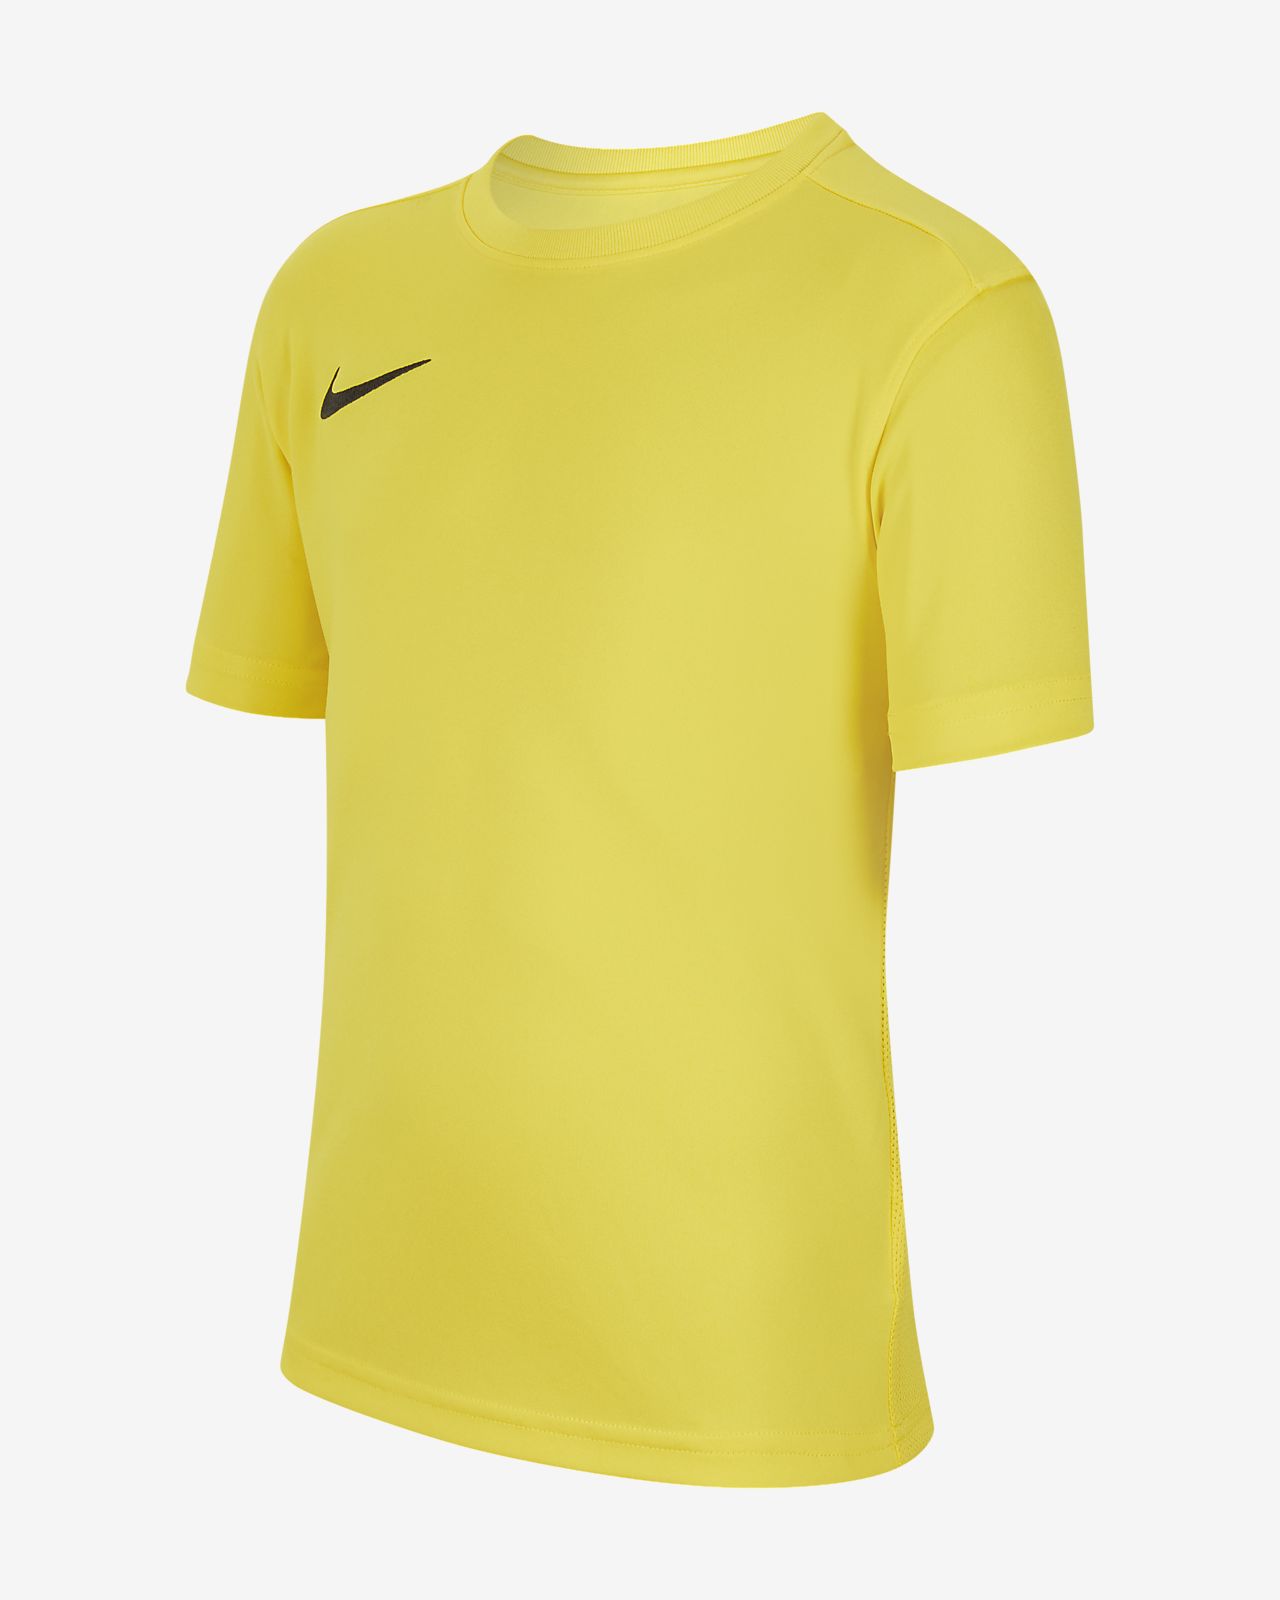 nike yellow soccer jersey